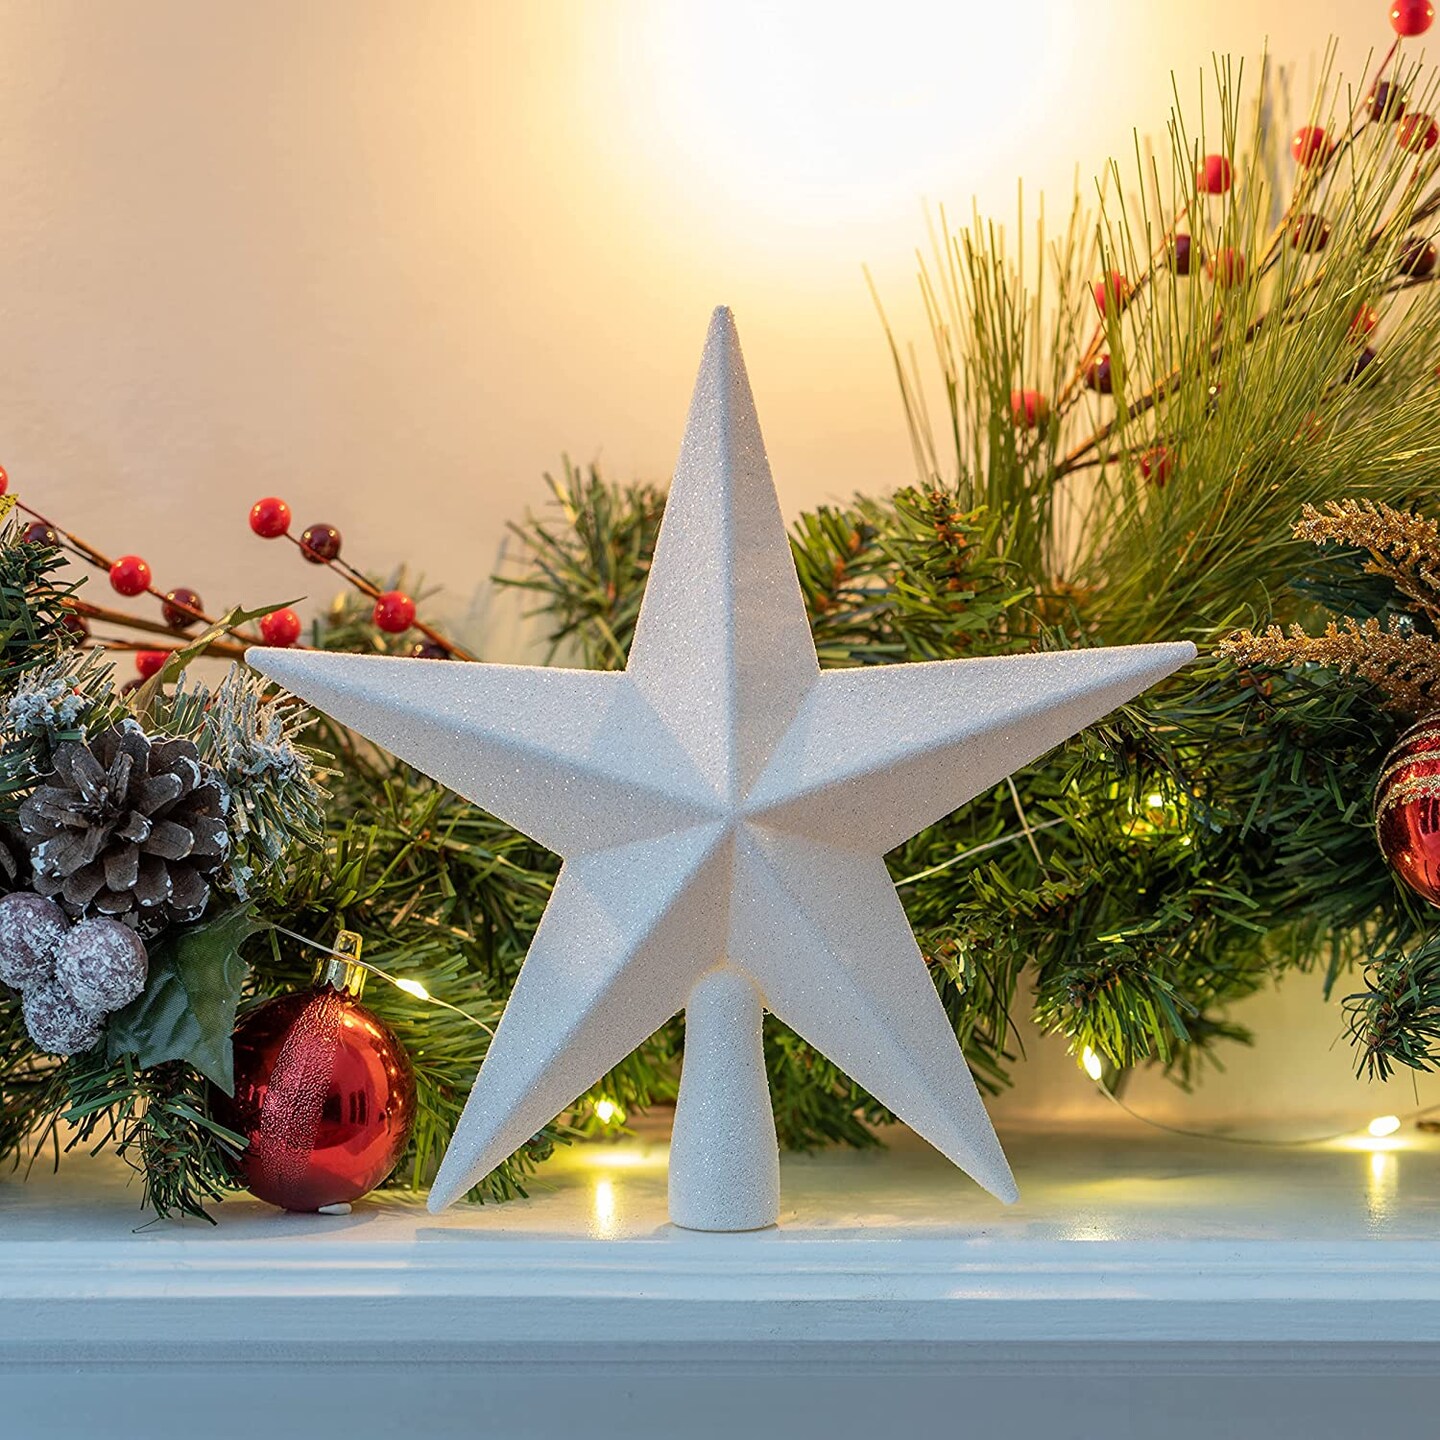 Ornativity Glitter Star Tree Topper - Christmas White Decorative Holiday Bethlehem Star Ornament